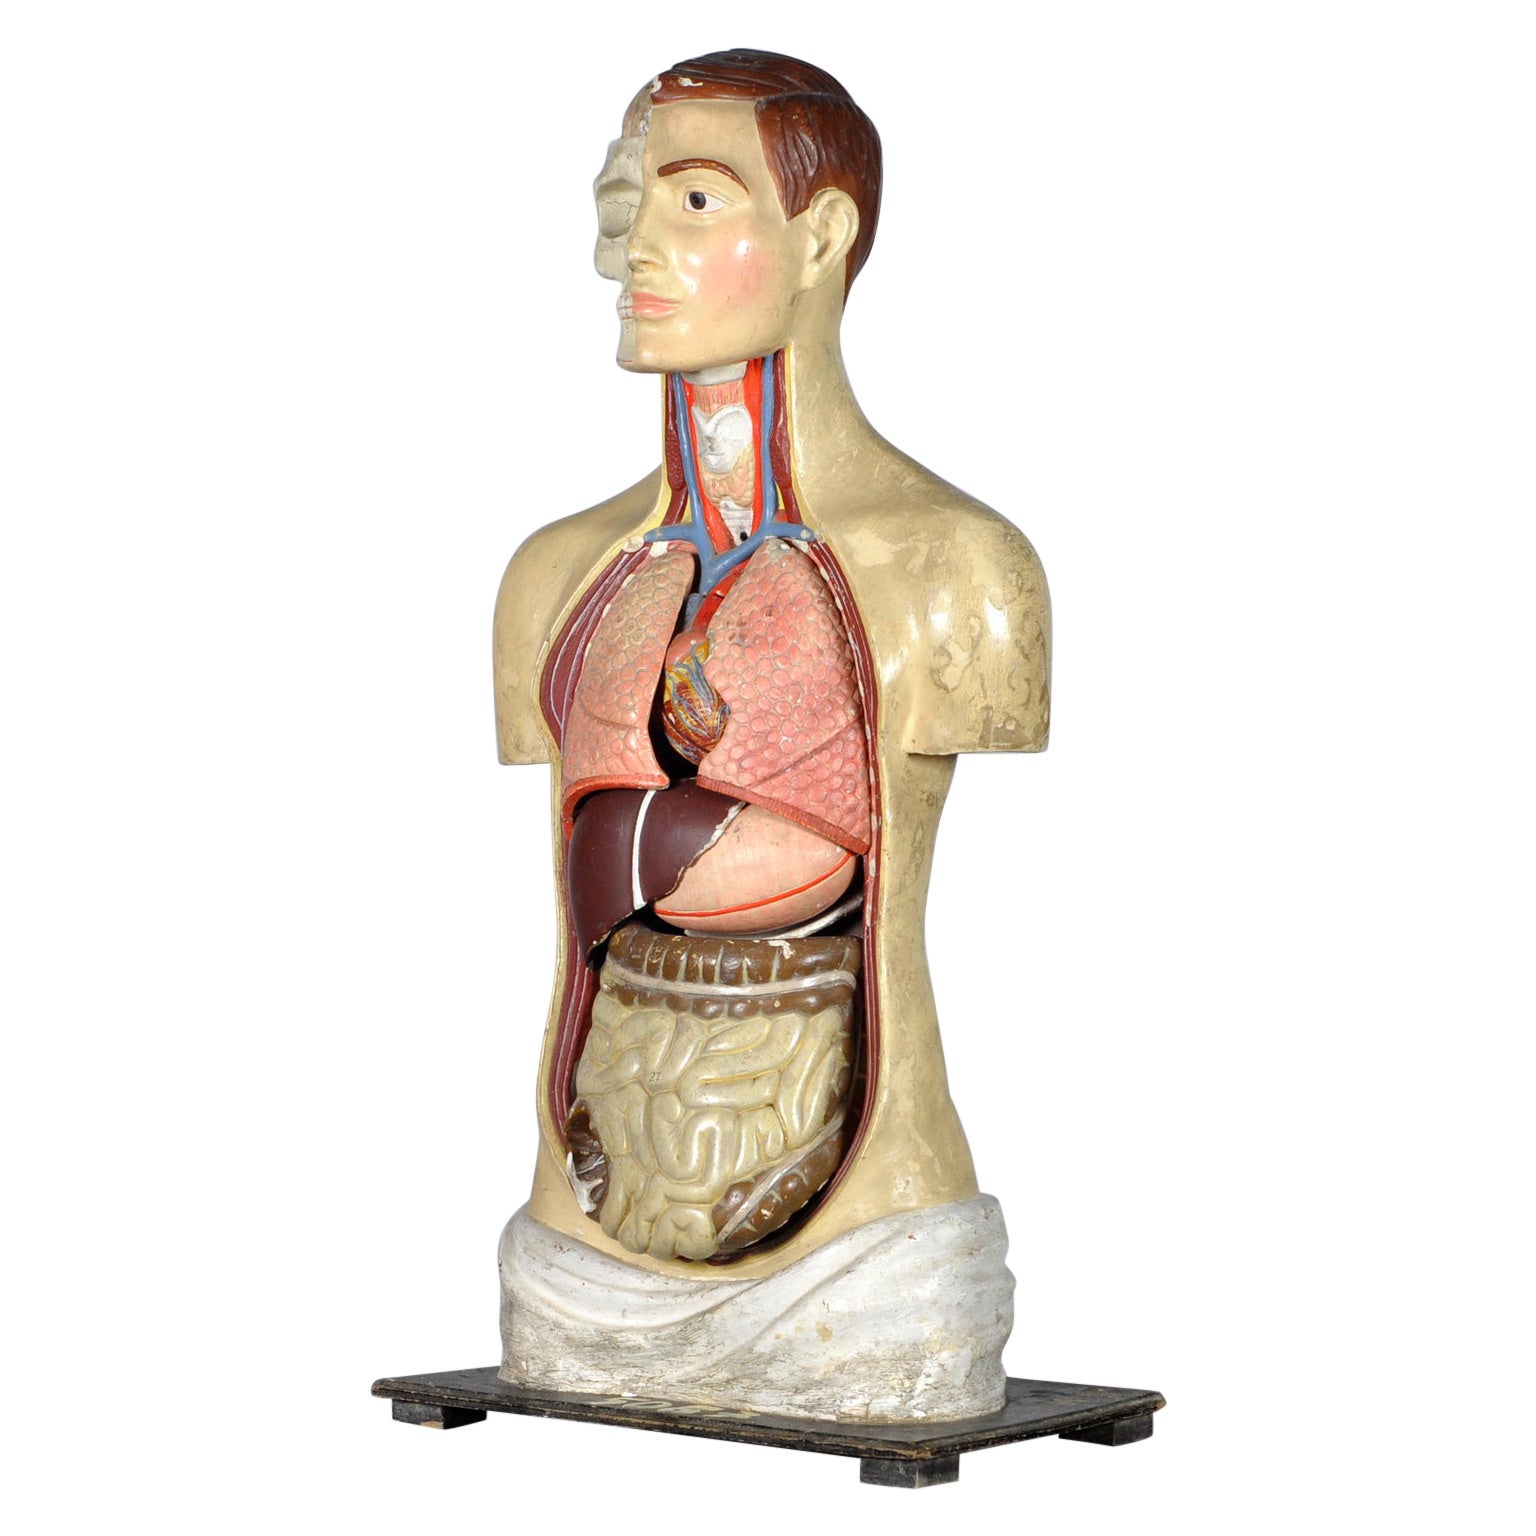 Anatomical Model, 1940's